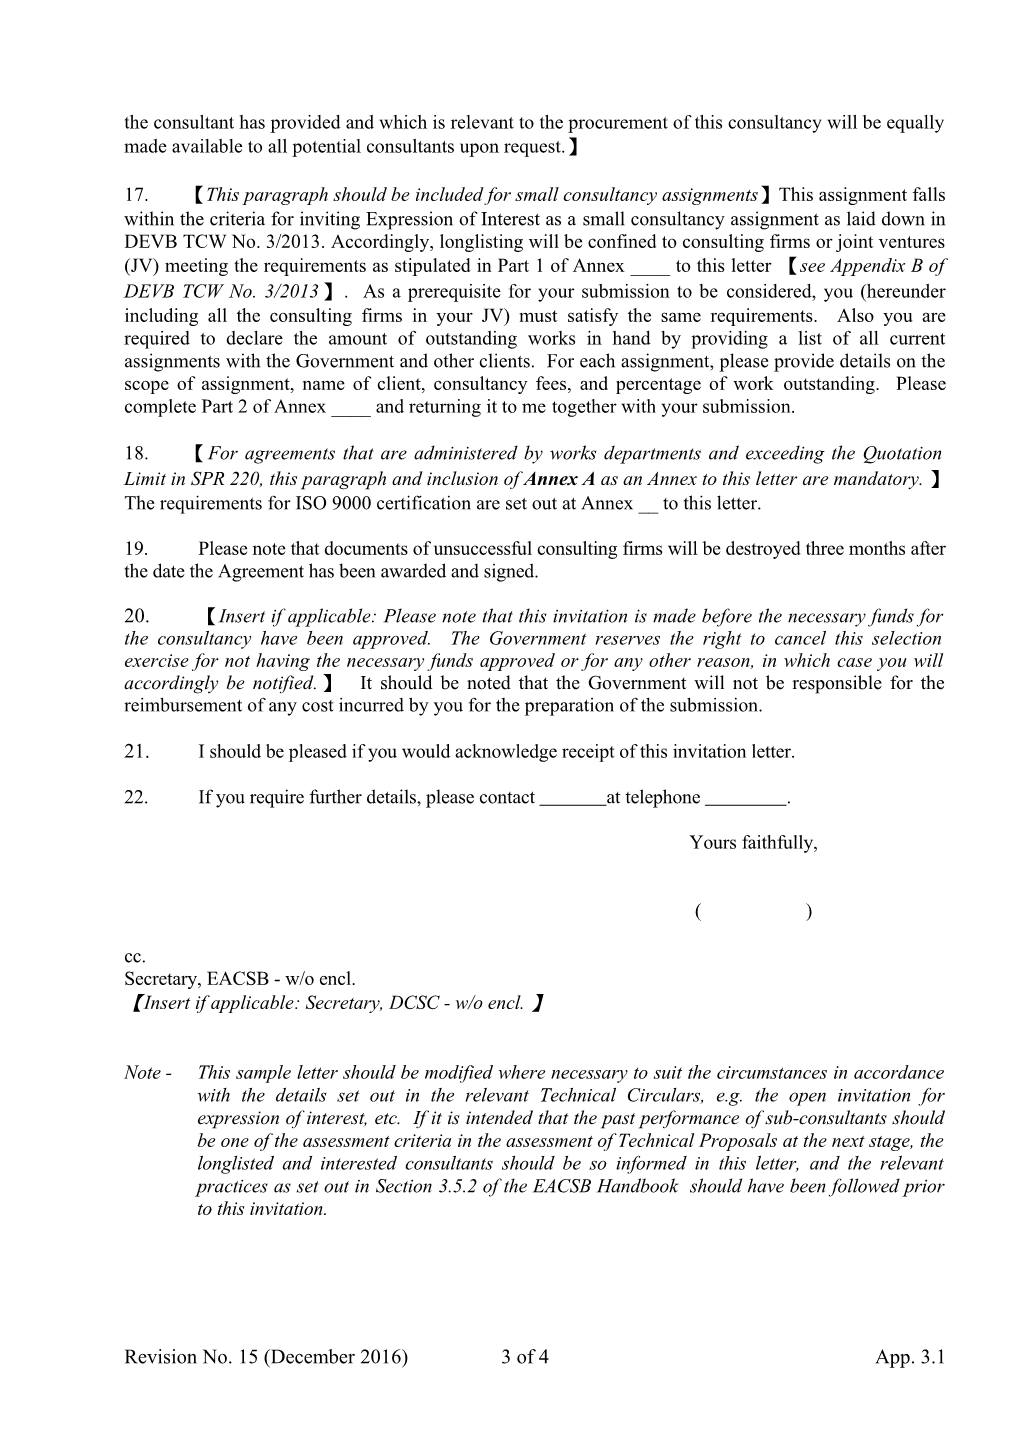 Appendix 2 Sample Invitation Letter for Expression of Interest